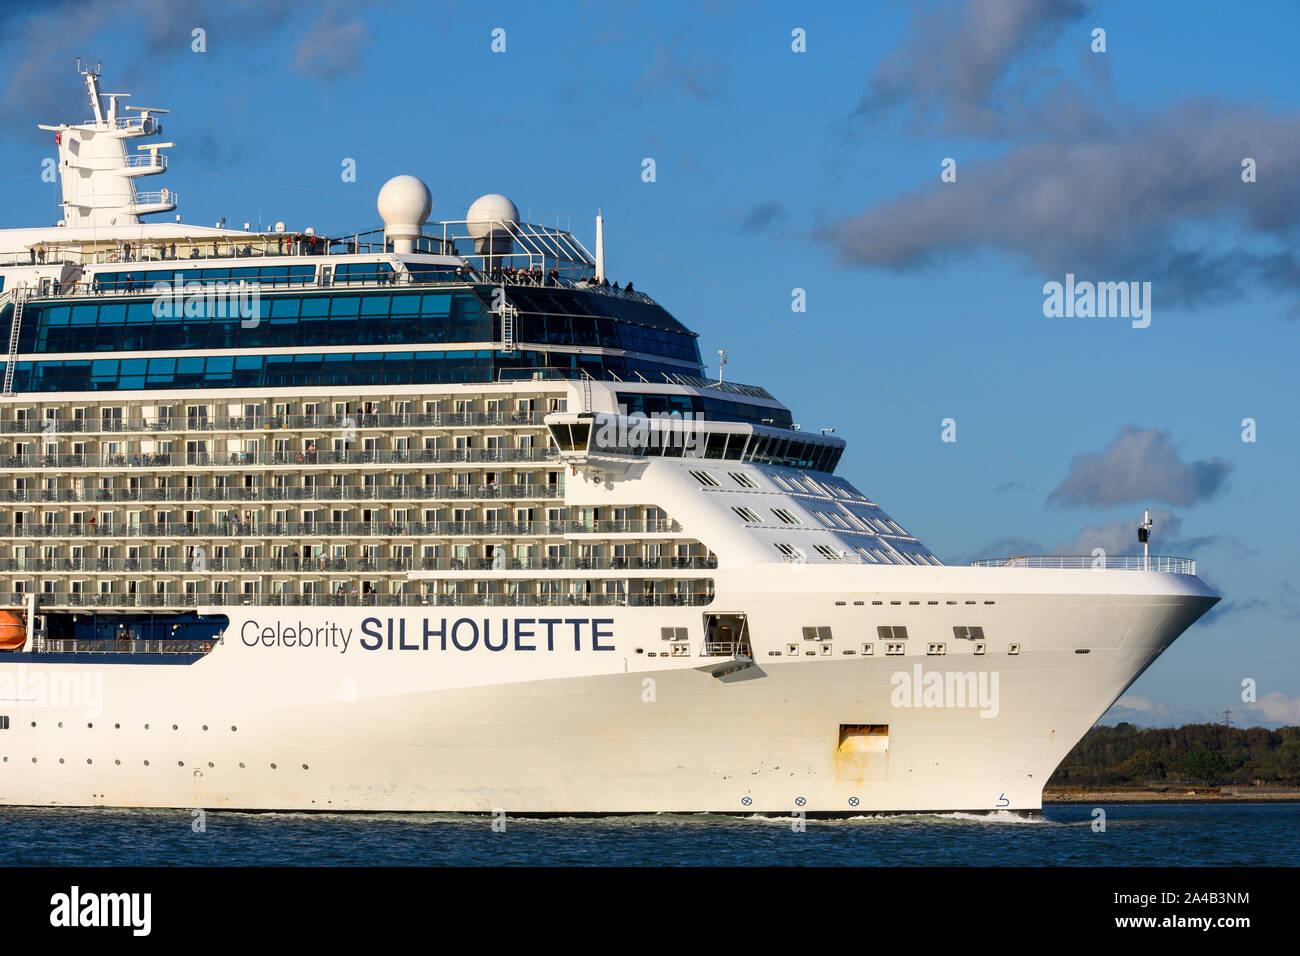 disney southern caribbean cruise 2024